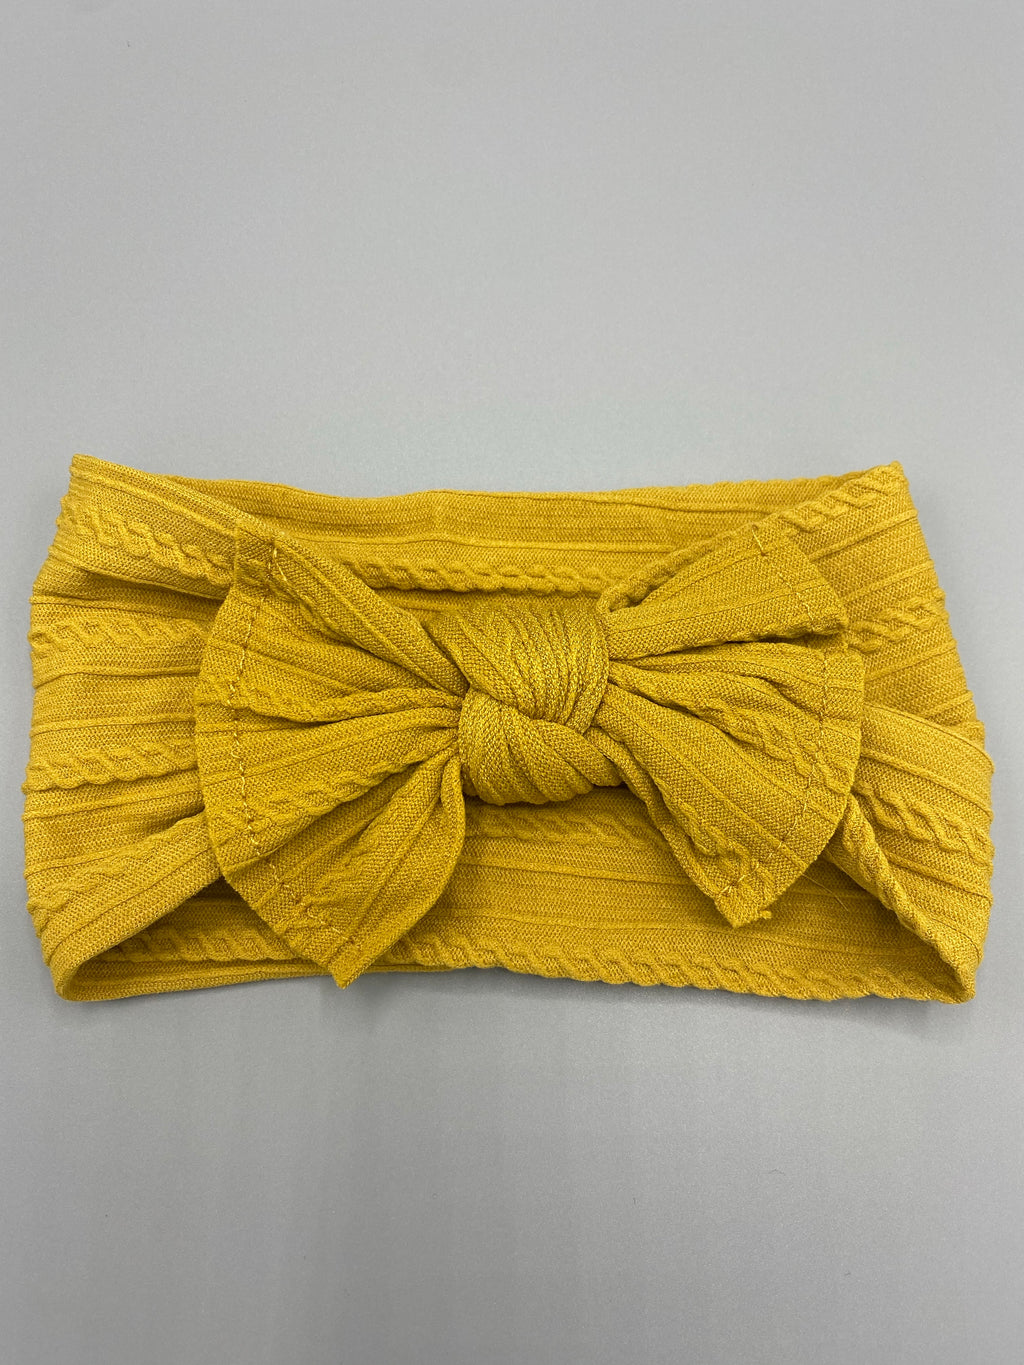 Mustard cable knit headband